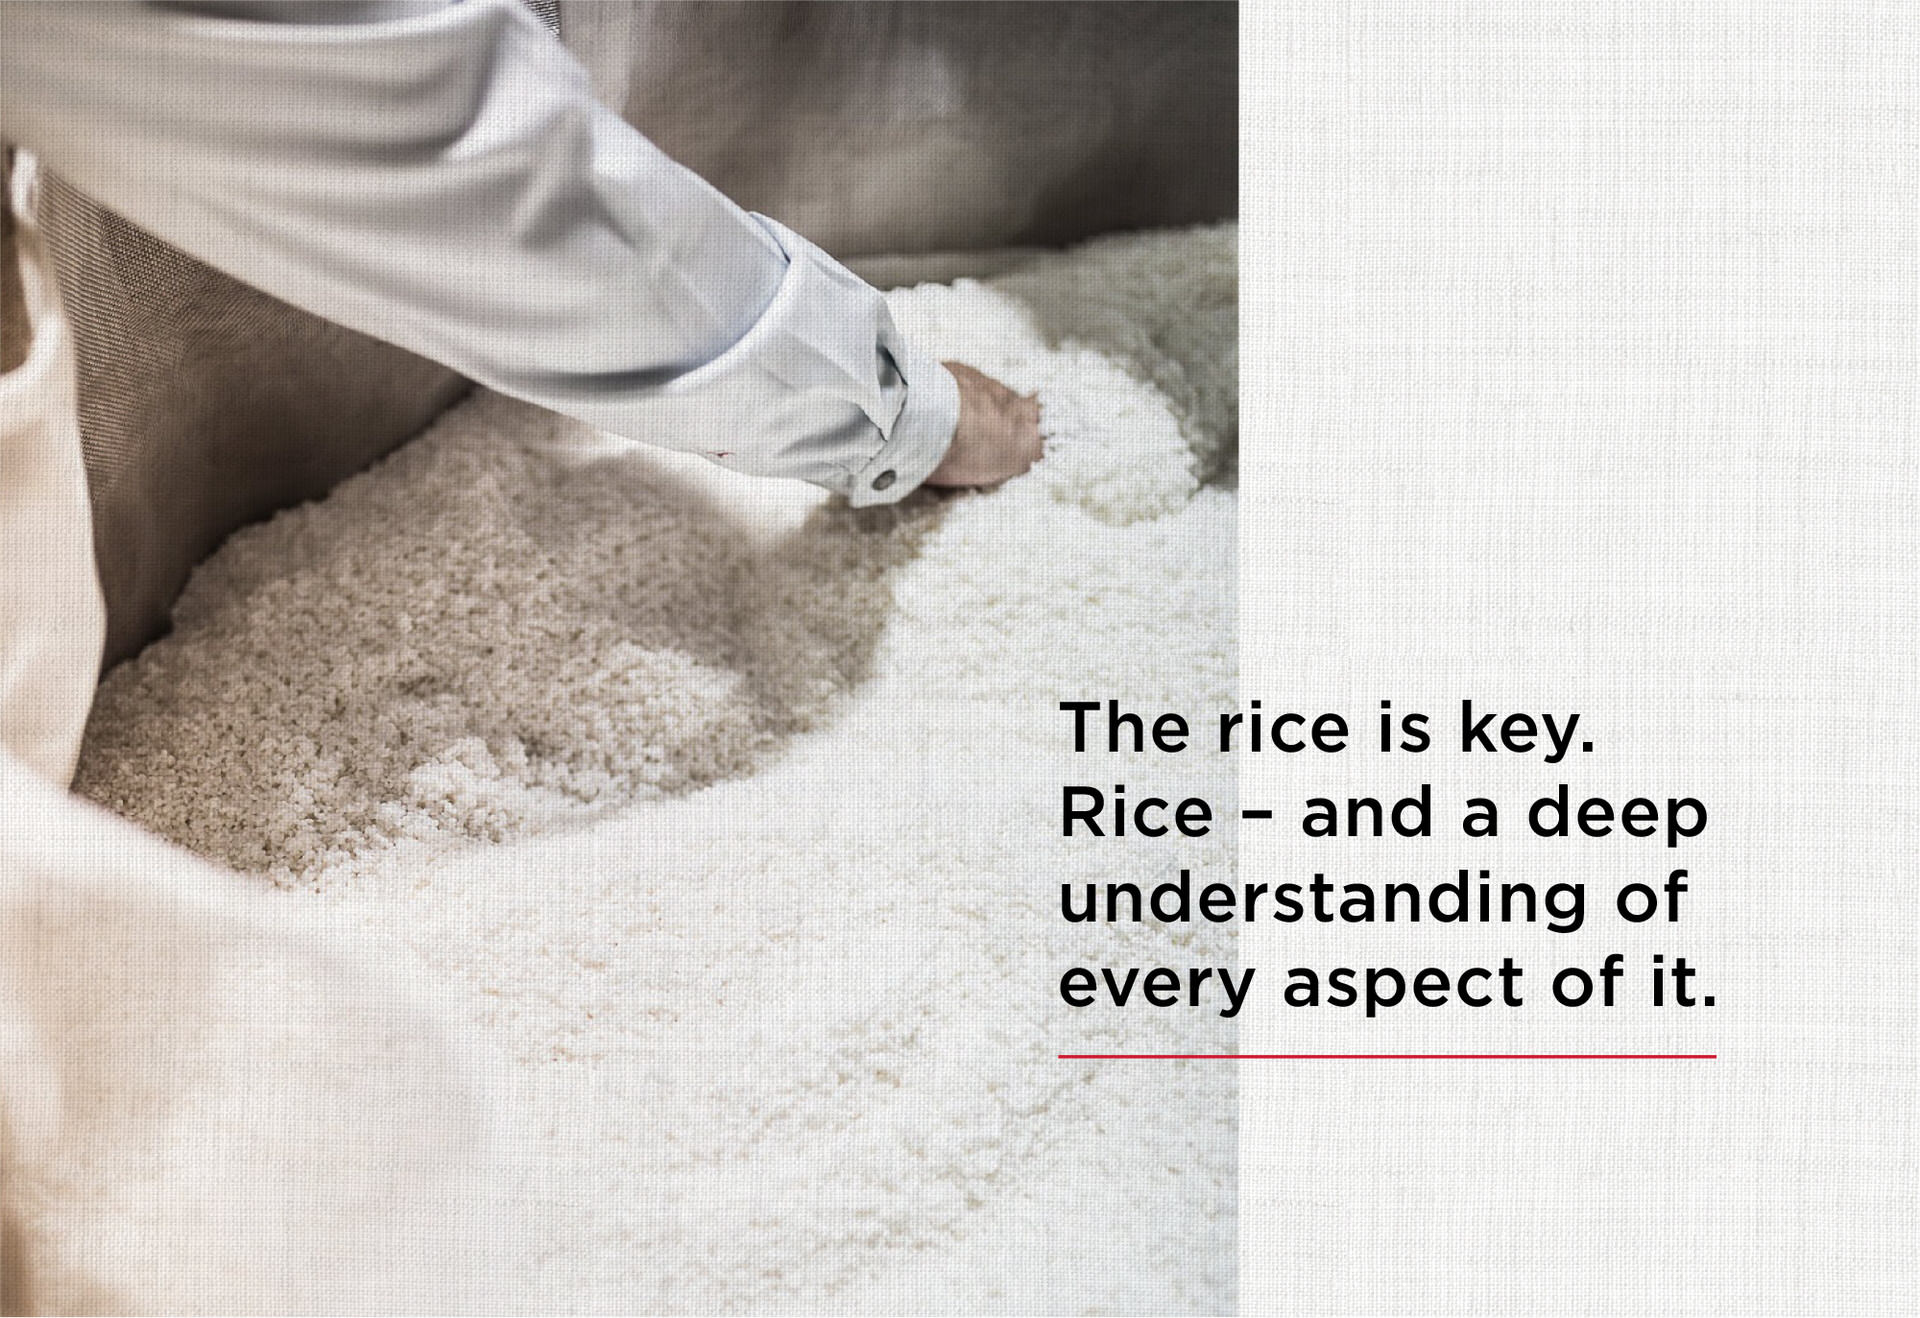 Rice is key